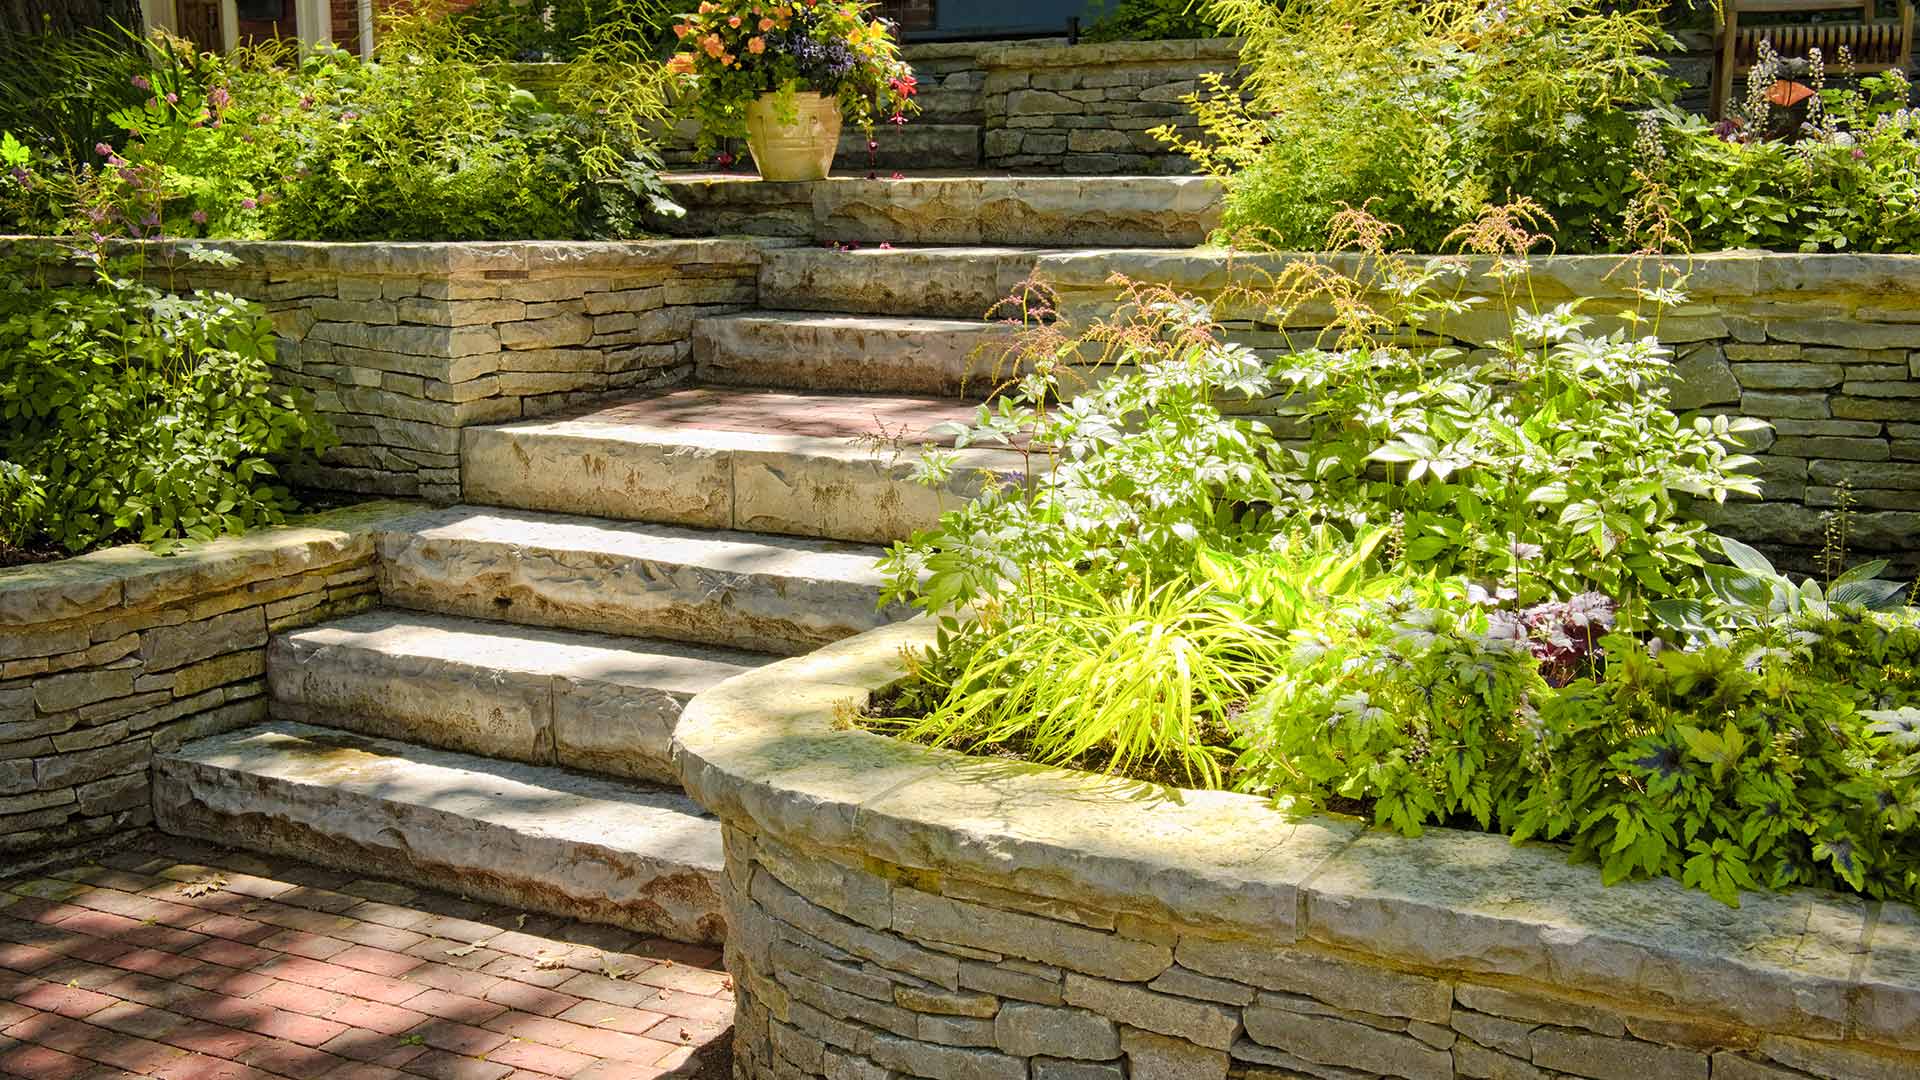 Siloam stone step service done by professionals in Grand Rapids, MI.